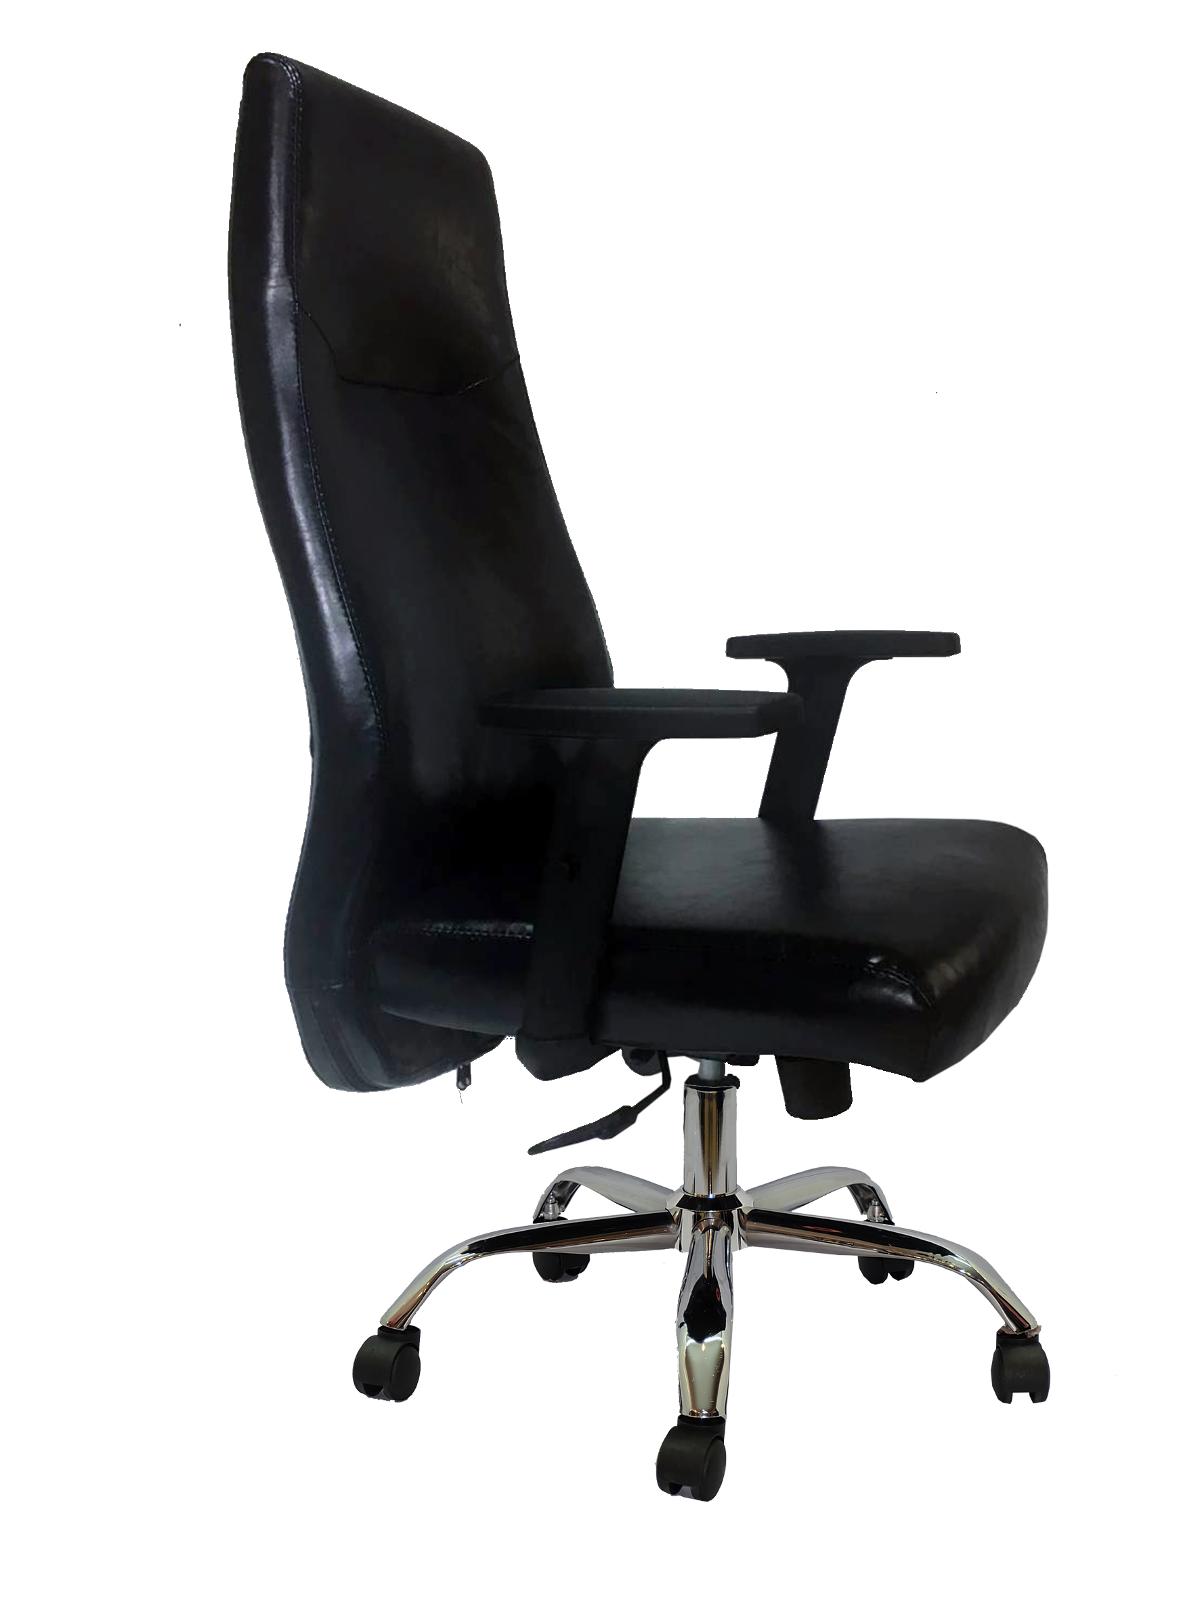 Super Chair เก้าอี้ผู้บริหาร รุ่น PK9700